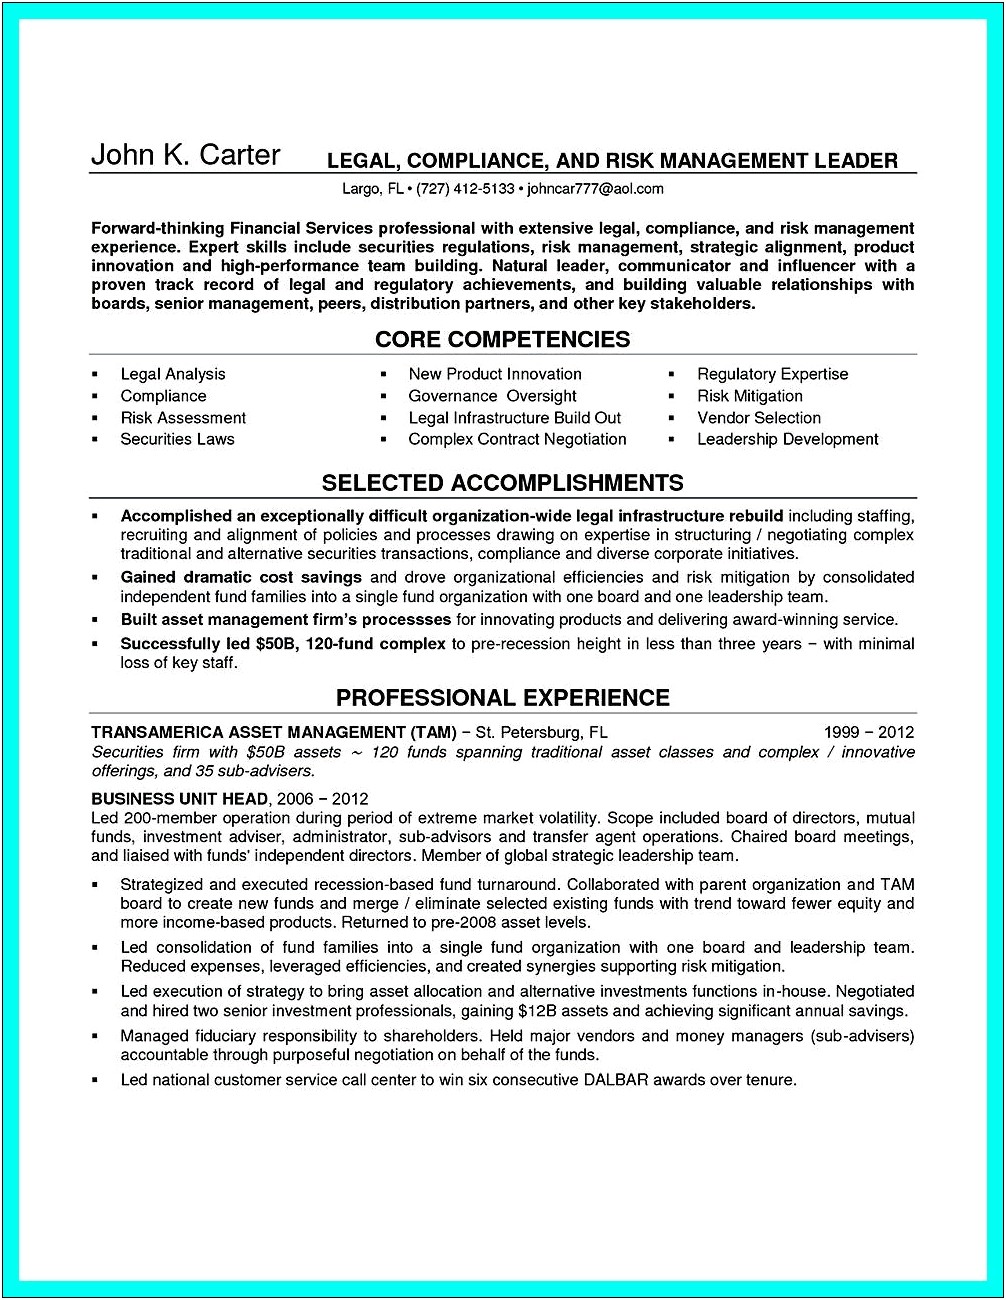 Aml Bsa Compliance Manager Resume Summary